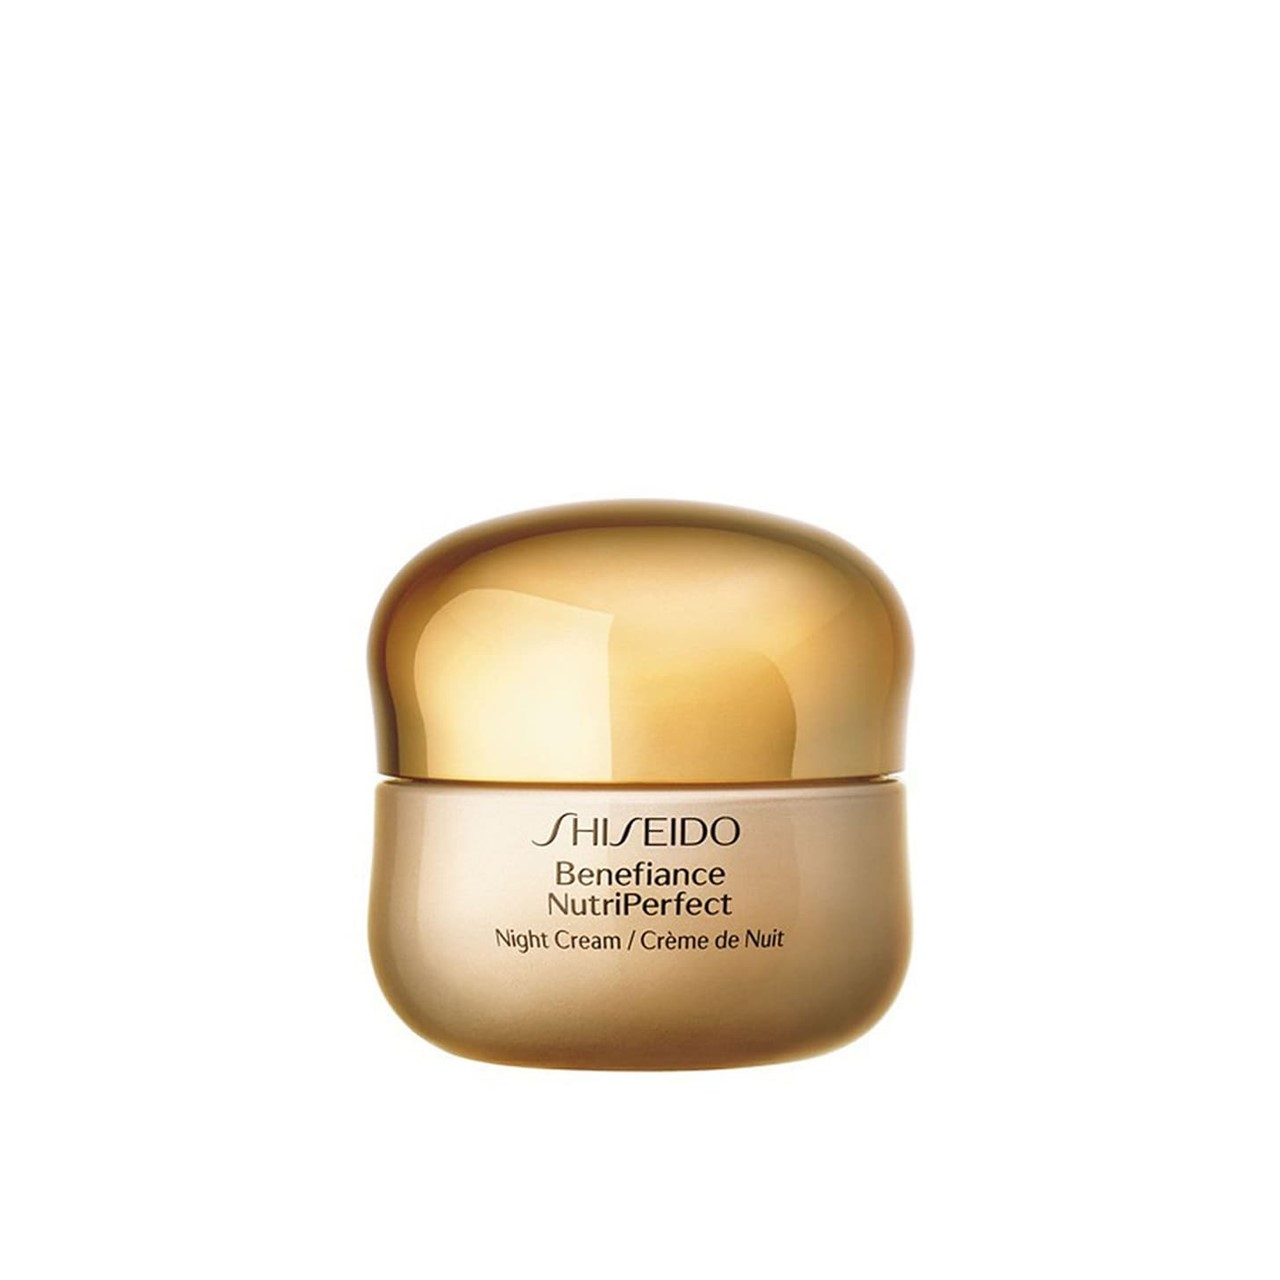 Shiseido Benefiance Nutriperfect Night Cream 50ml (1.69fl oz)